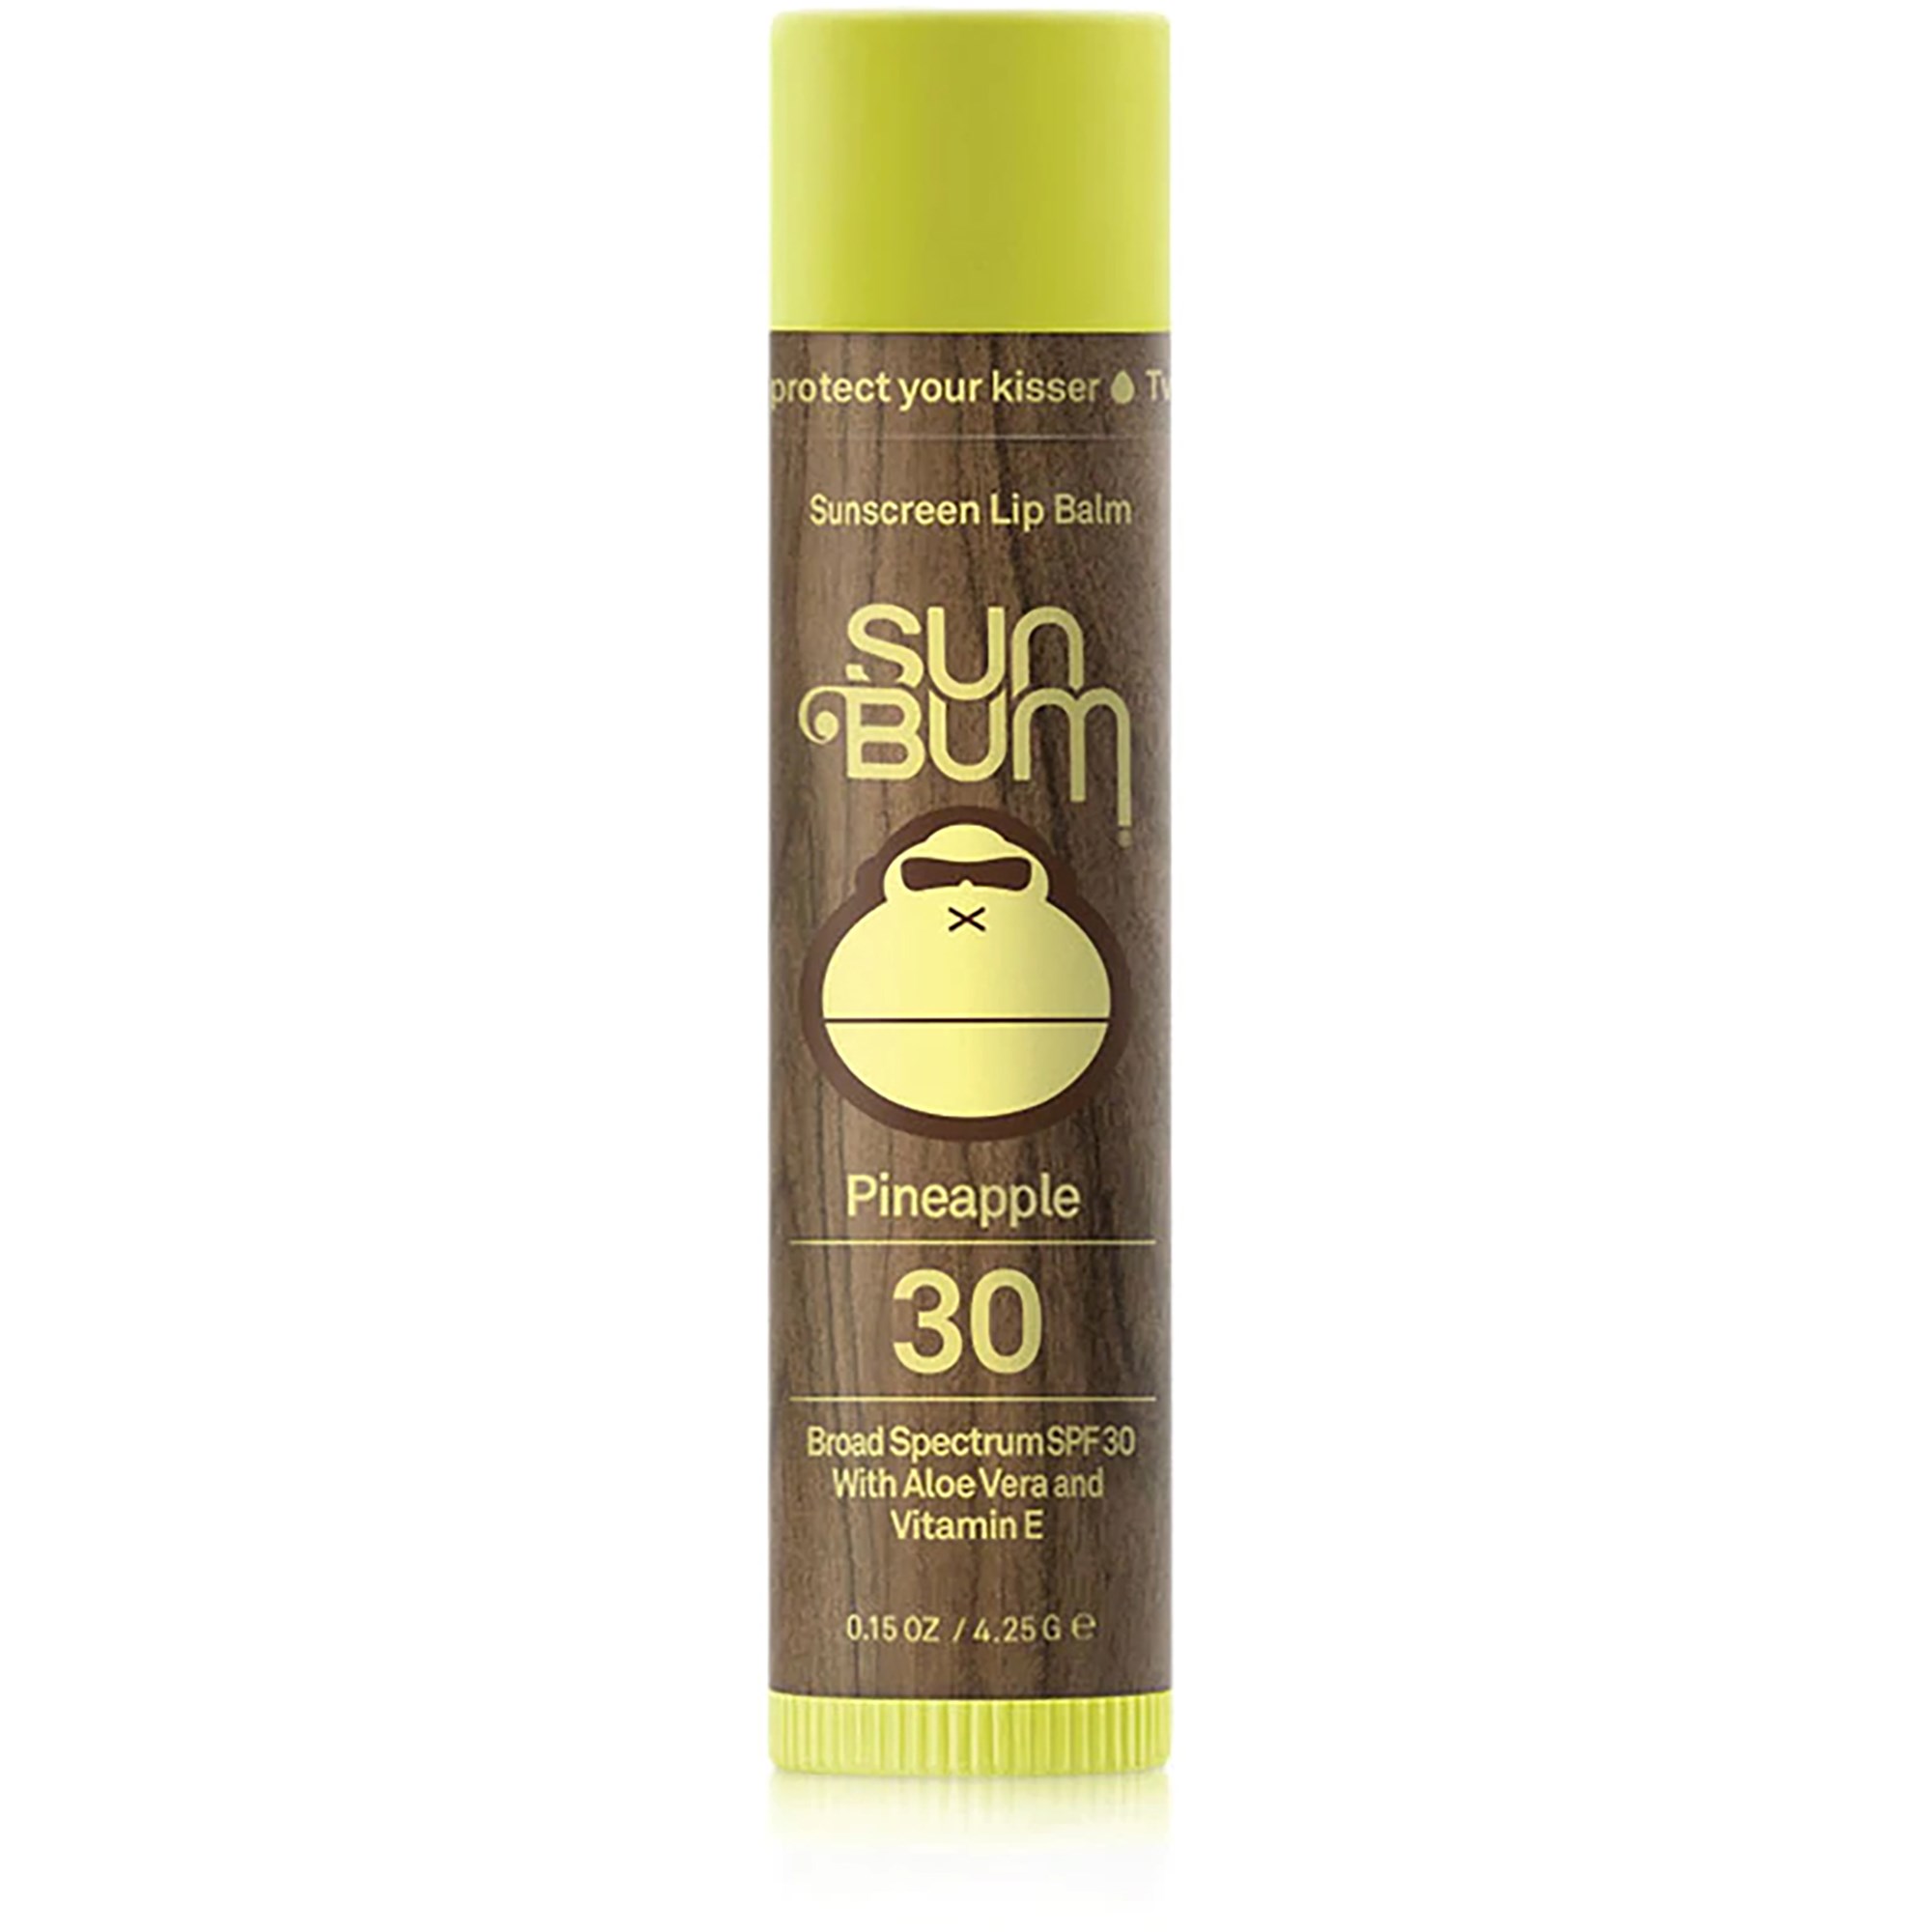 Bilde av Sun Bum Original Spf 30 Sunscreen Lip Balm Pineapple